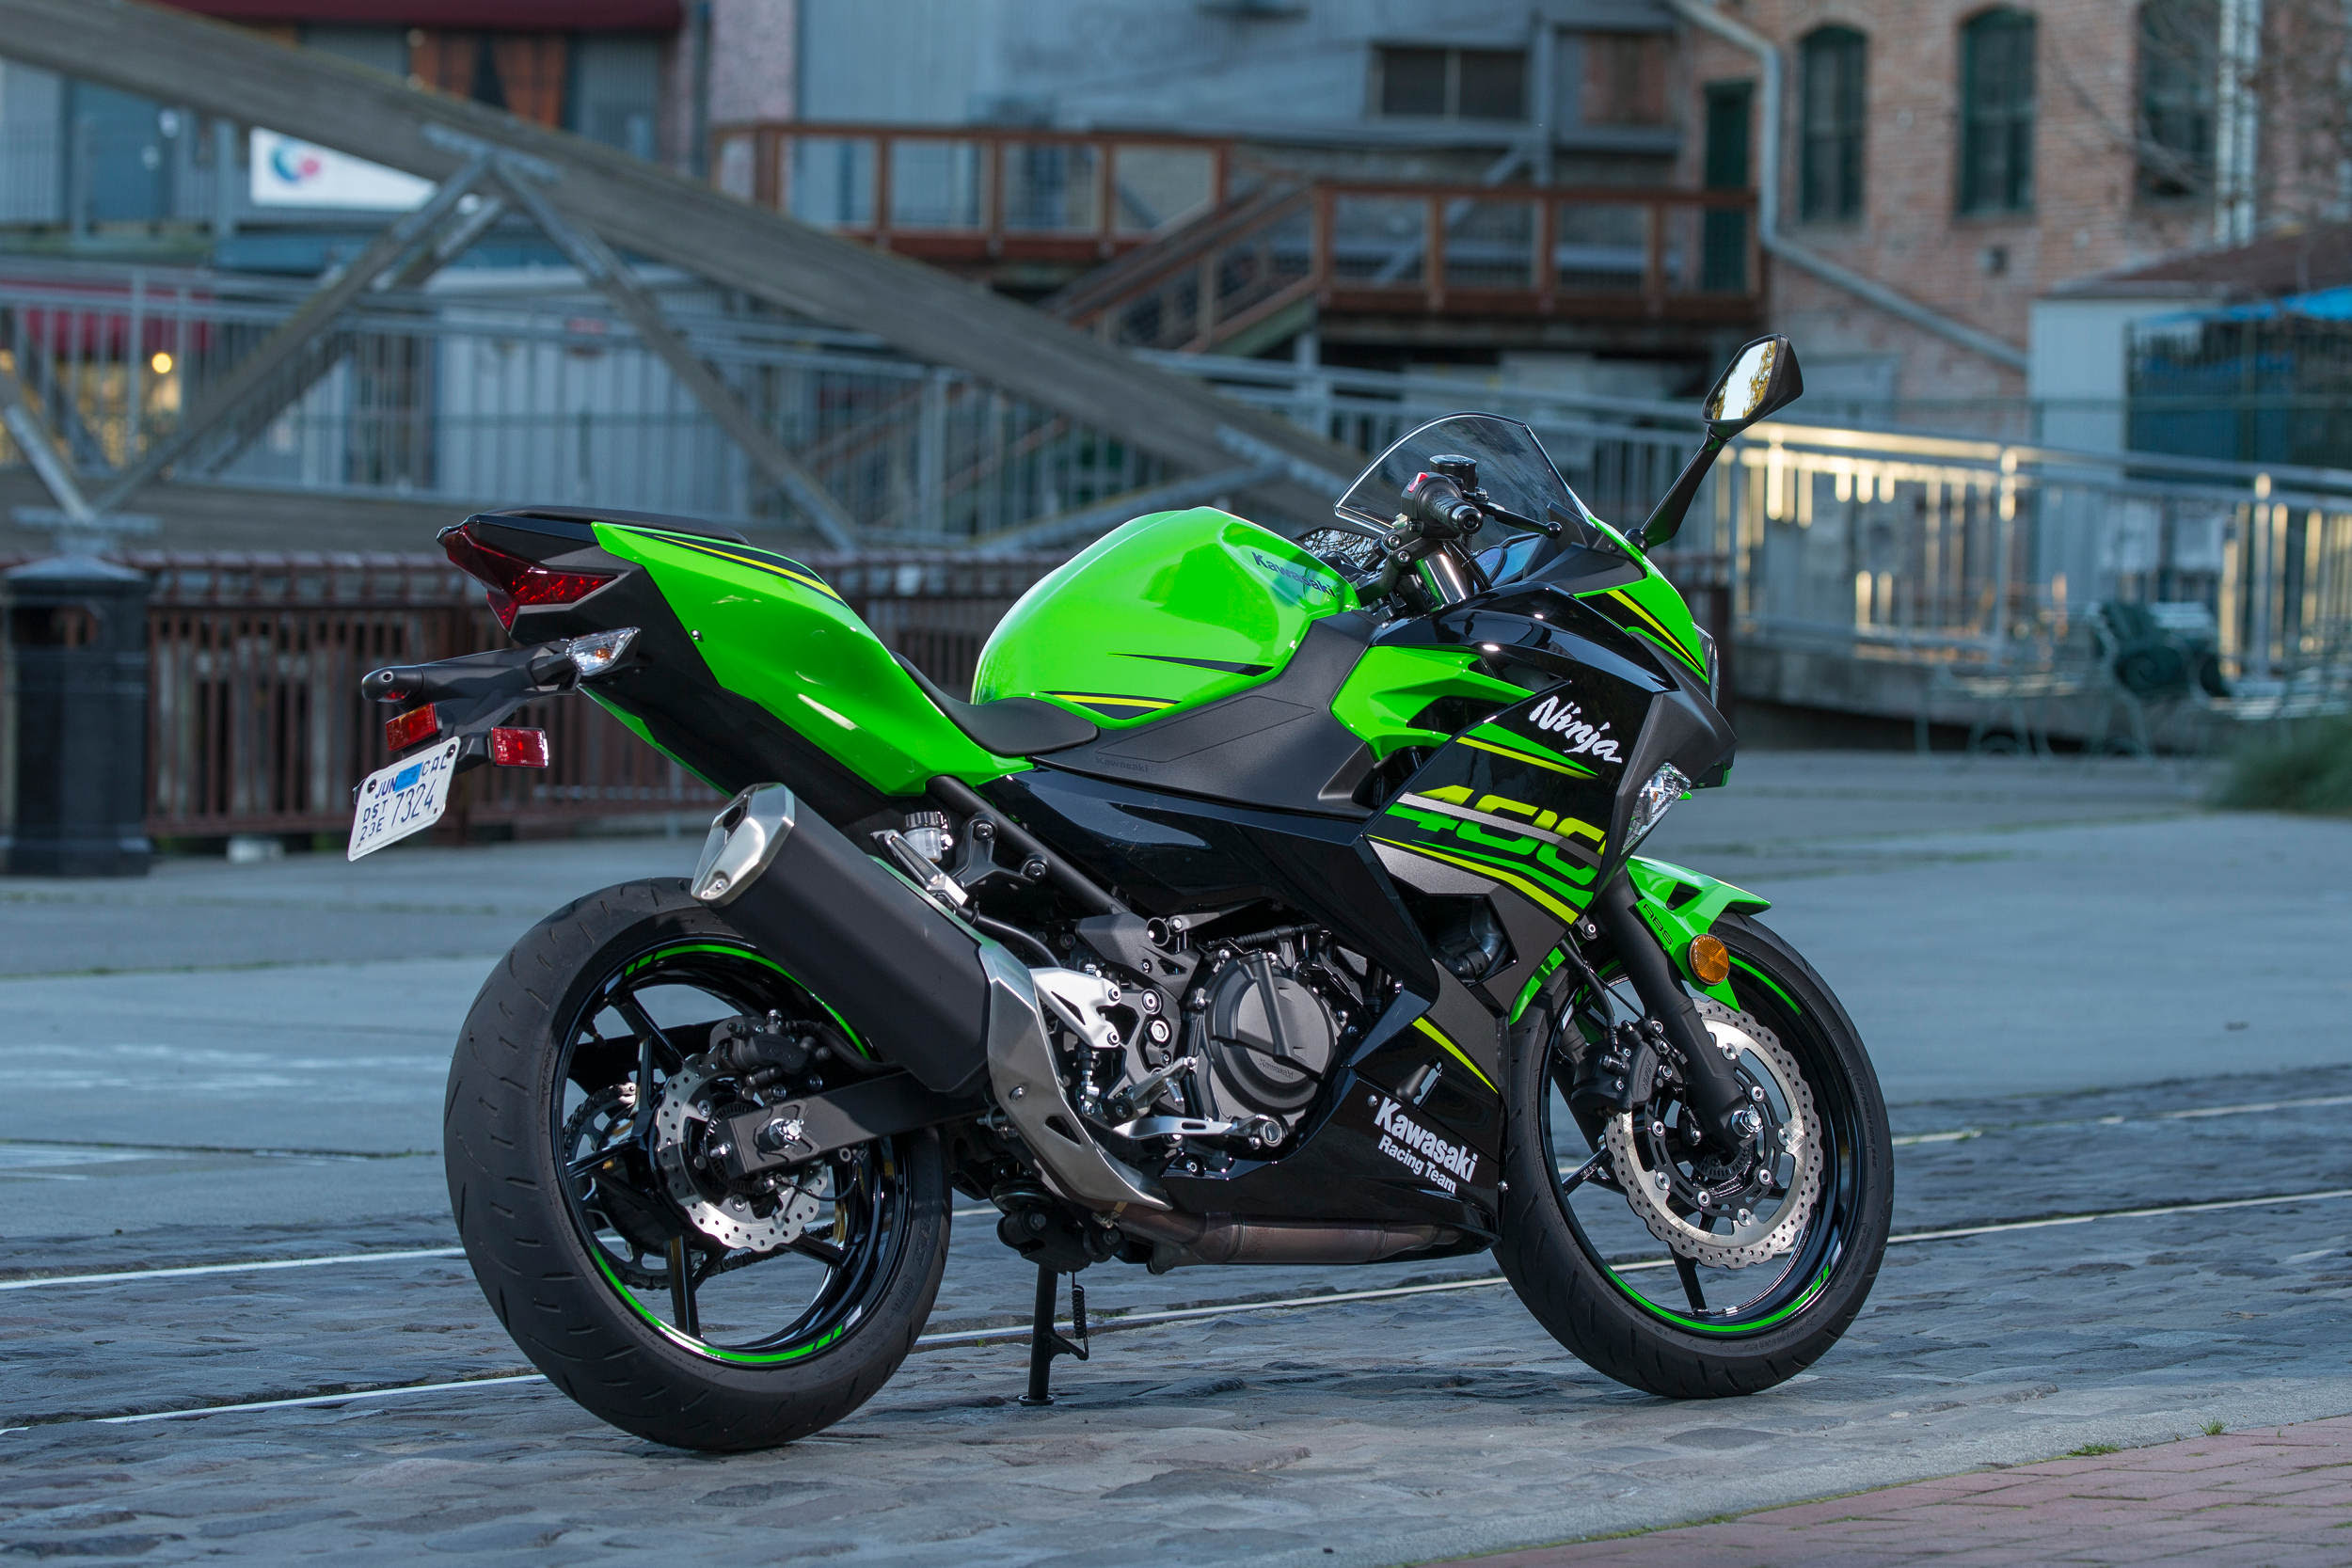 Kawasaki Ninja 400r Top Speed - Auto Reviews